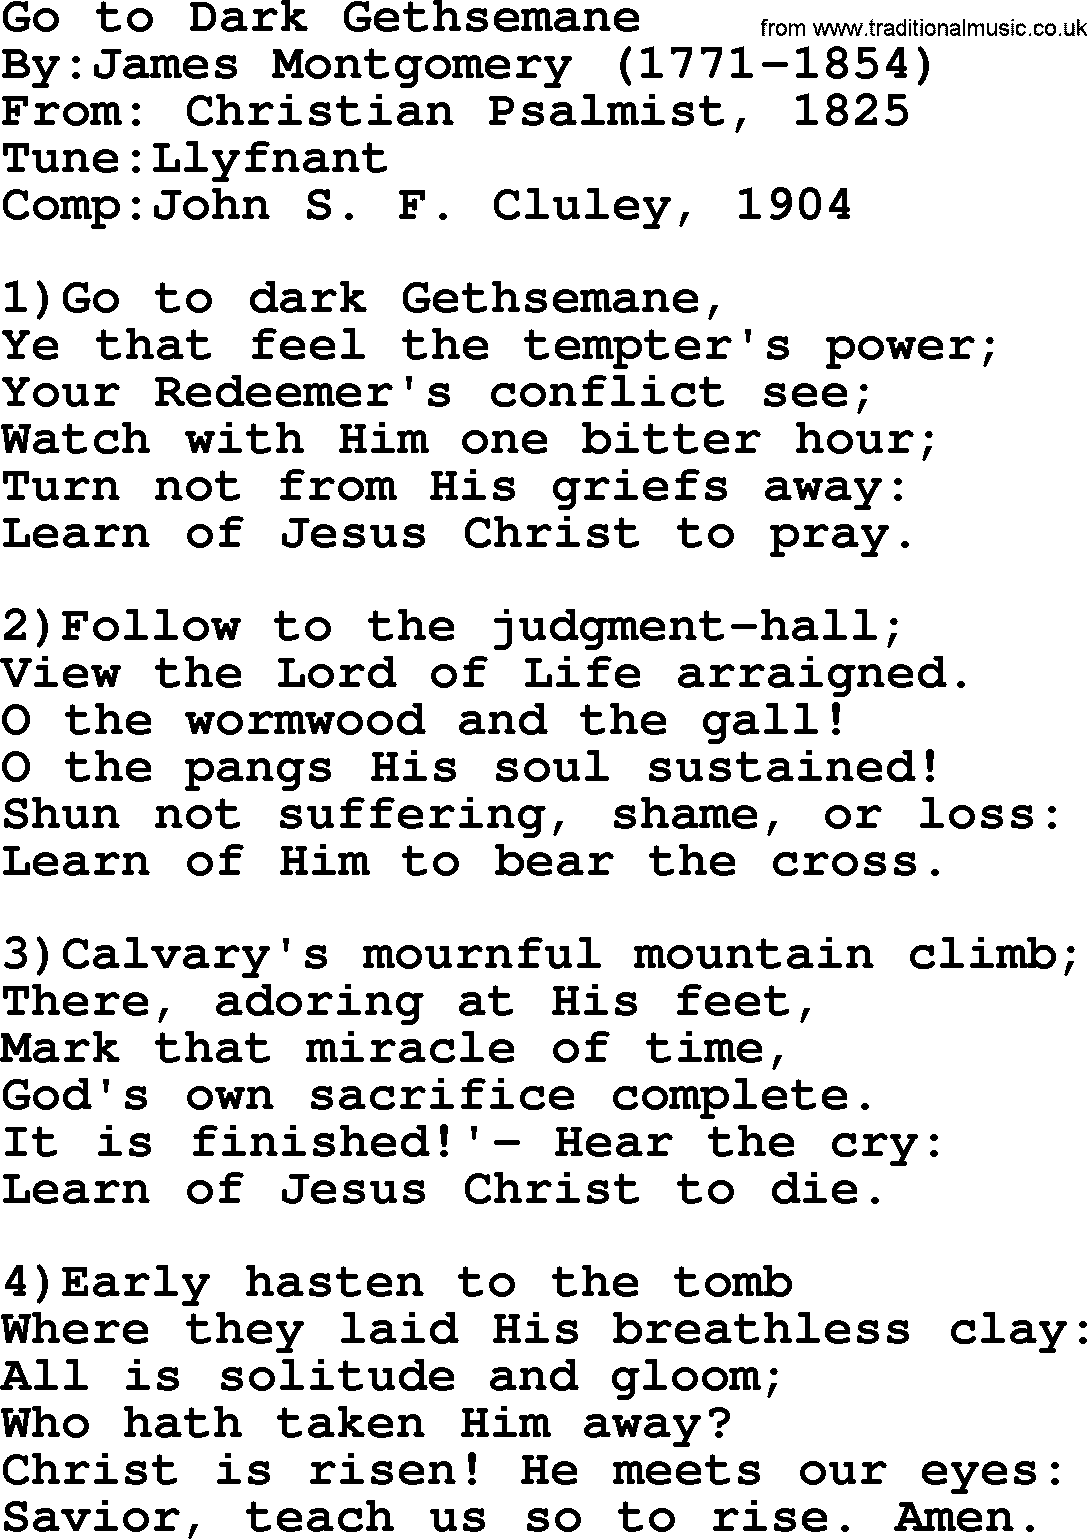 Methodist Hymn: Go To Dark Gethsemane, lyrics